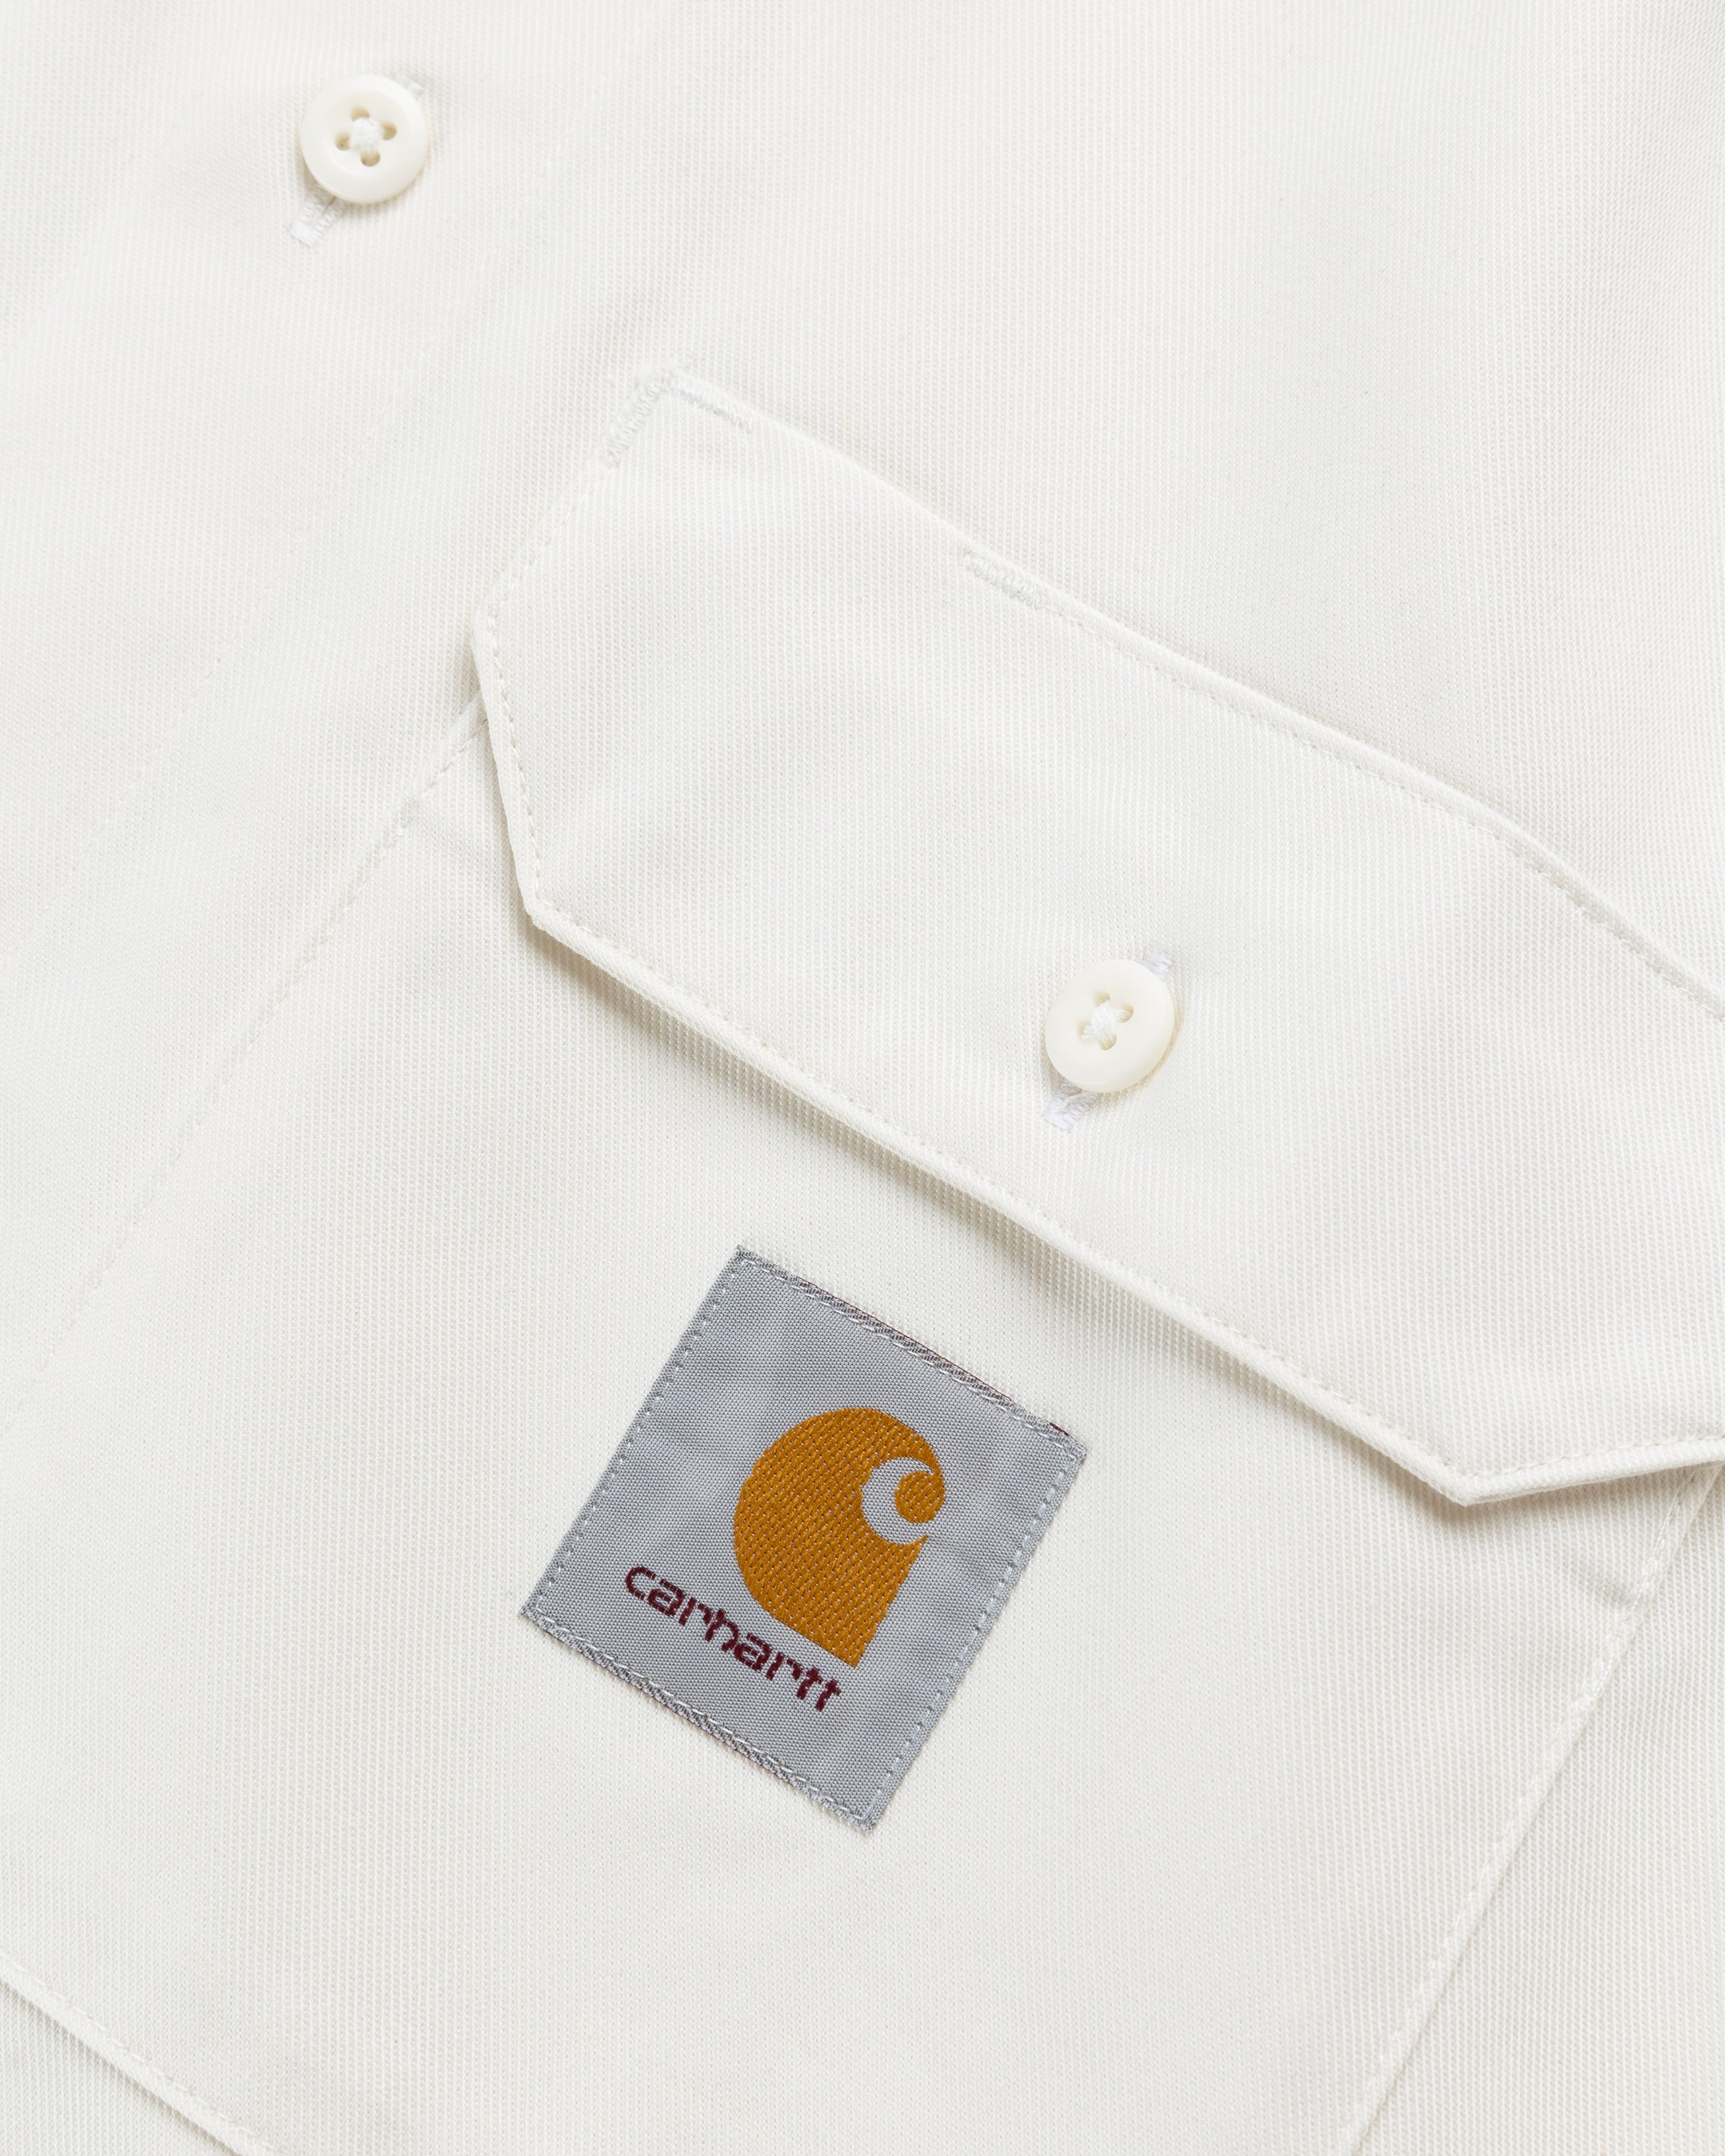 Carhartt WIP - Master Shirt Wax - Clothing - White - Image 6